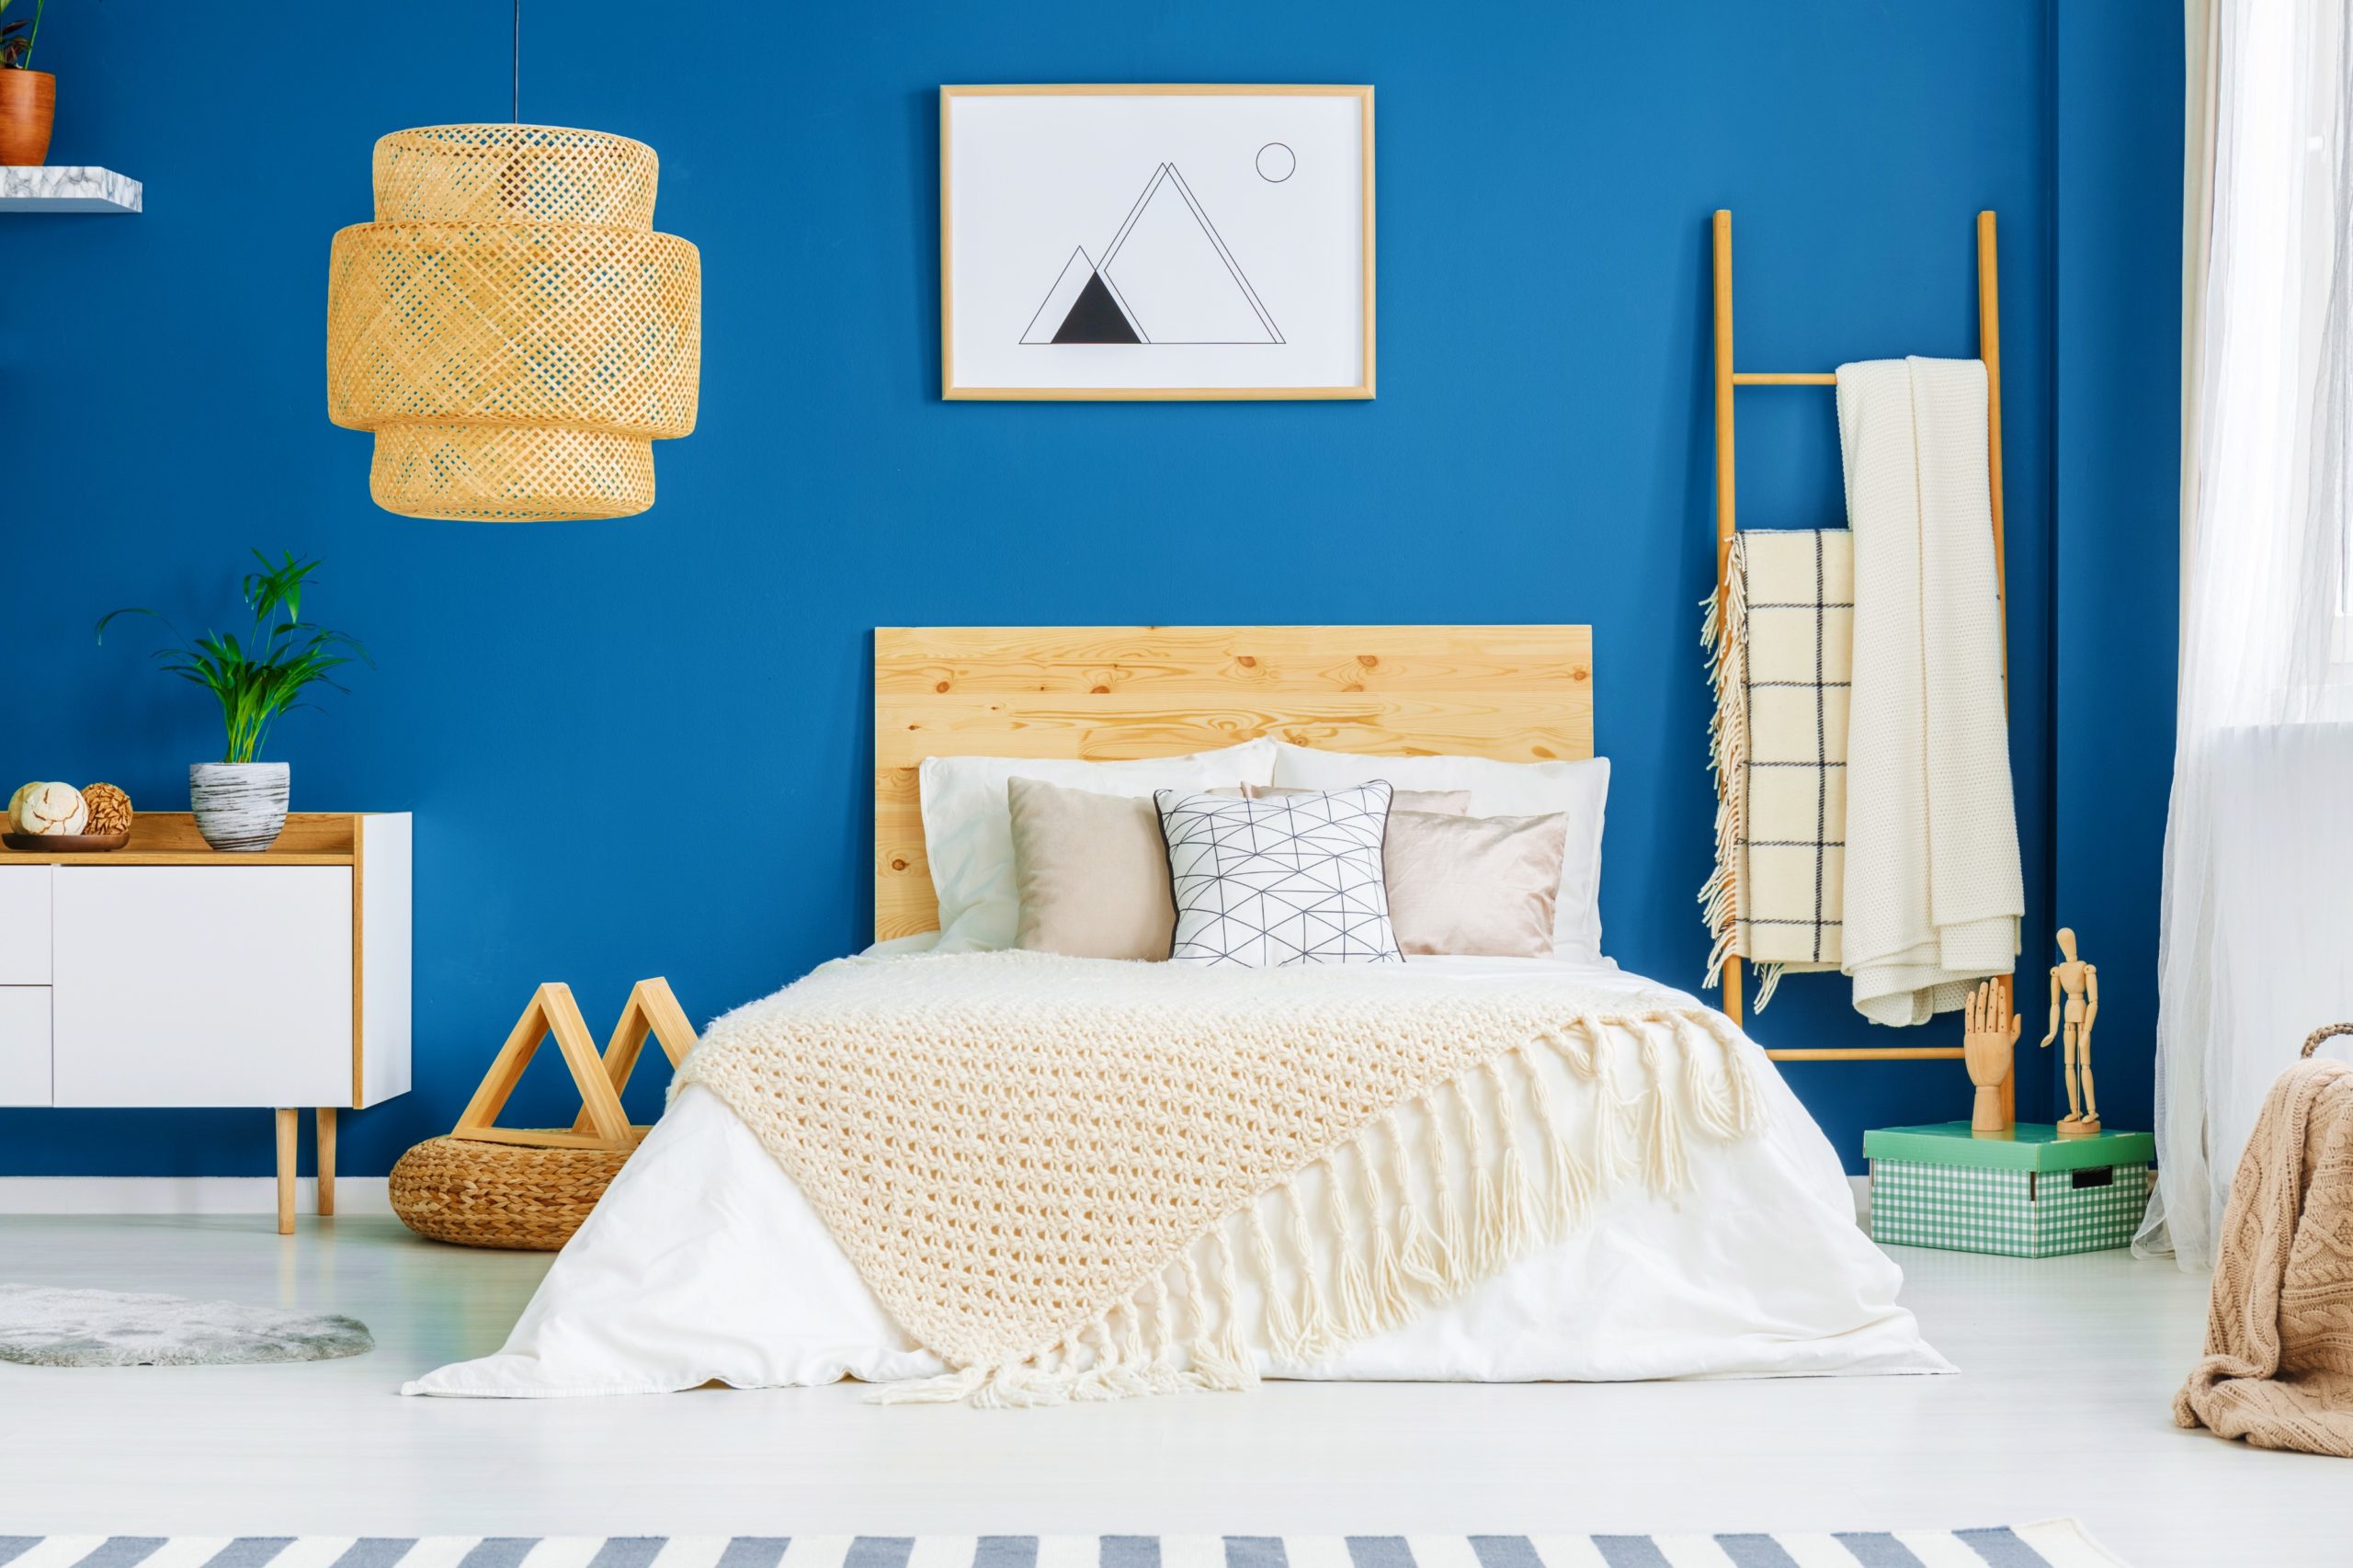 <img src="blue.jpg" alt="blue dreamy bedroom interior design"/> 